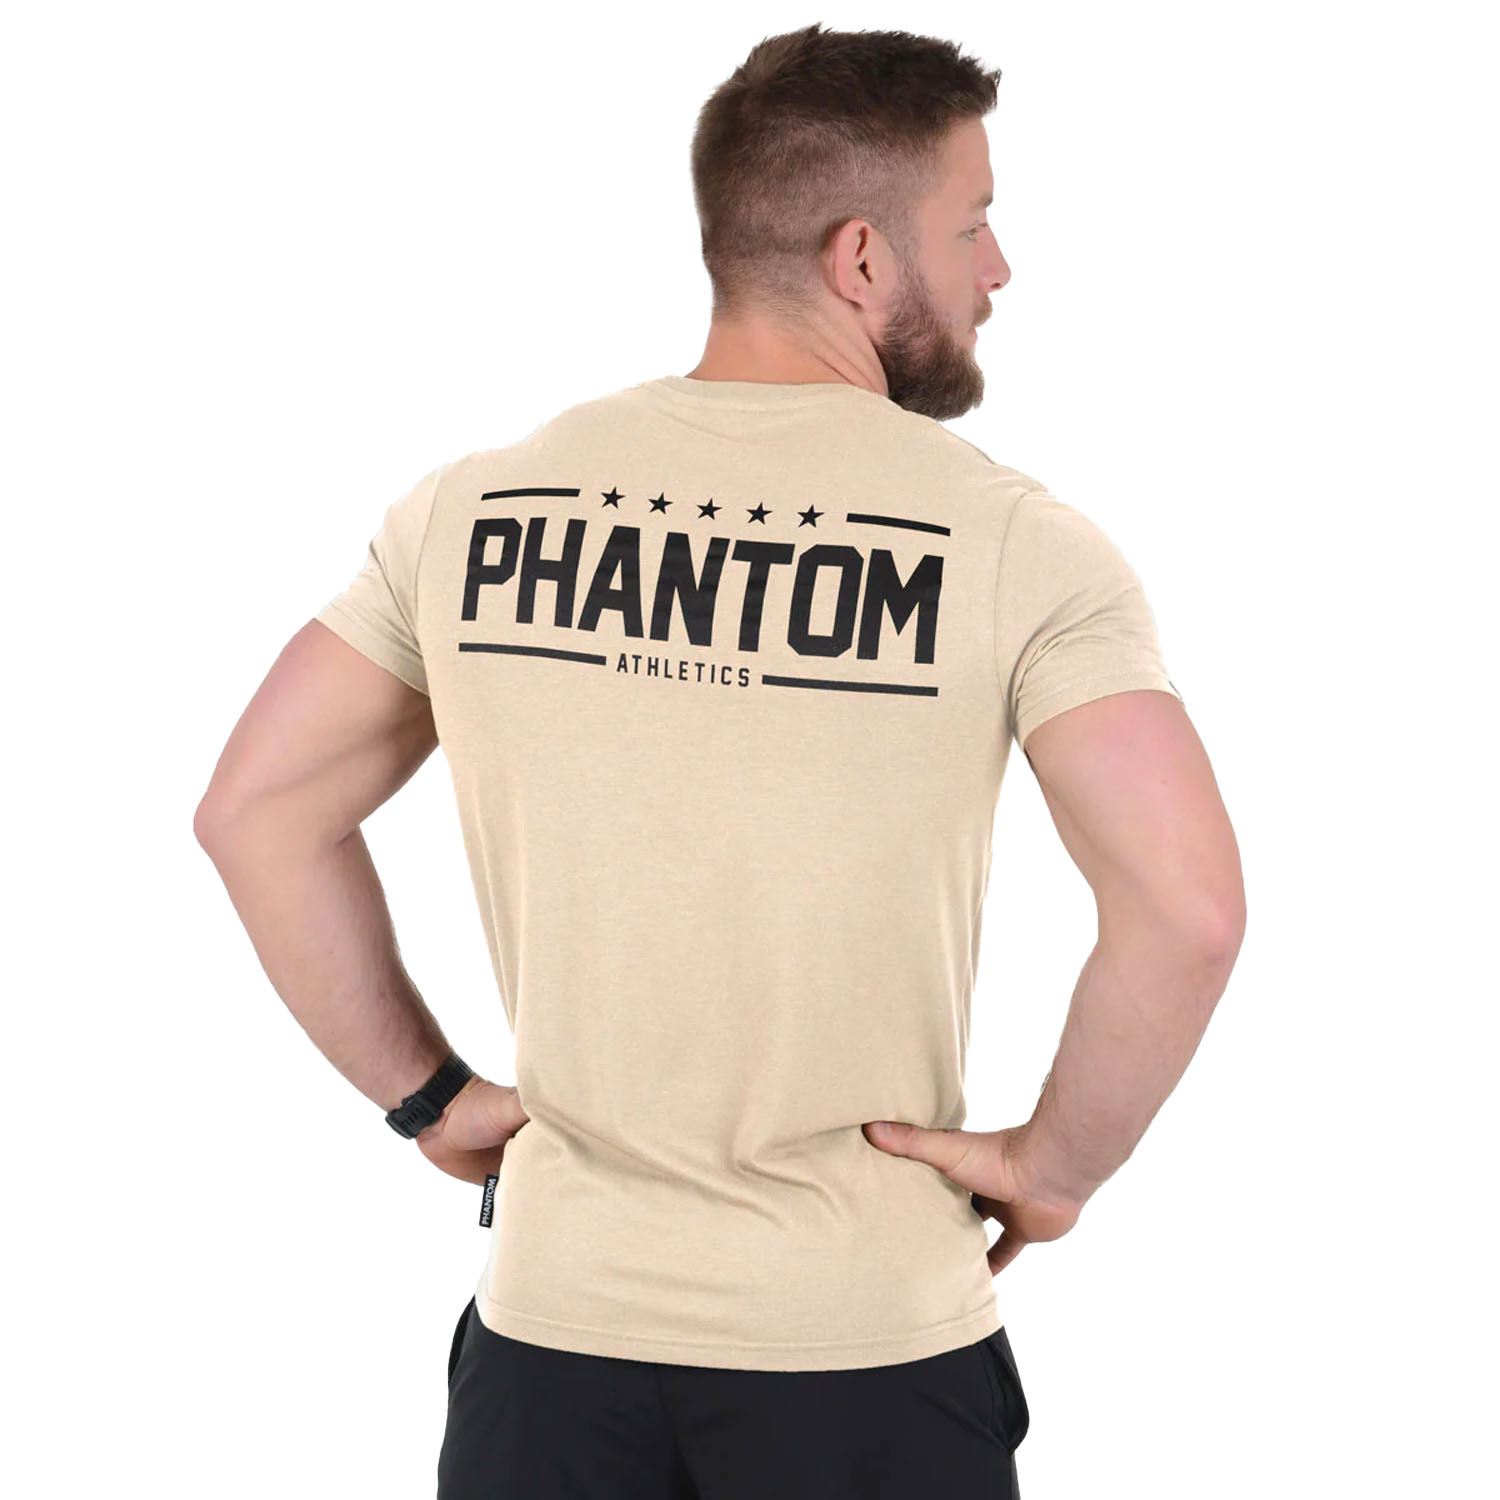 Phantom Athletics T-Shirt, Born In The Cage, sand, L